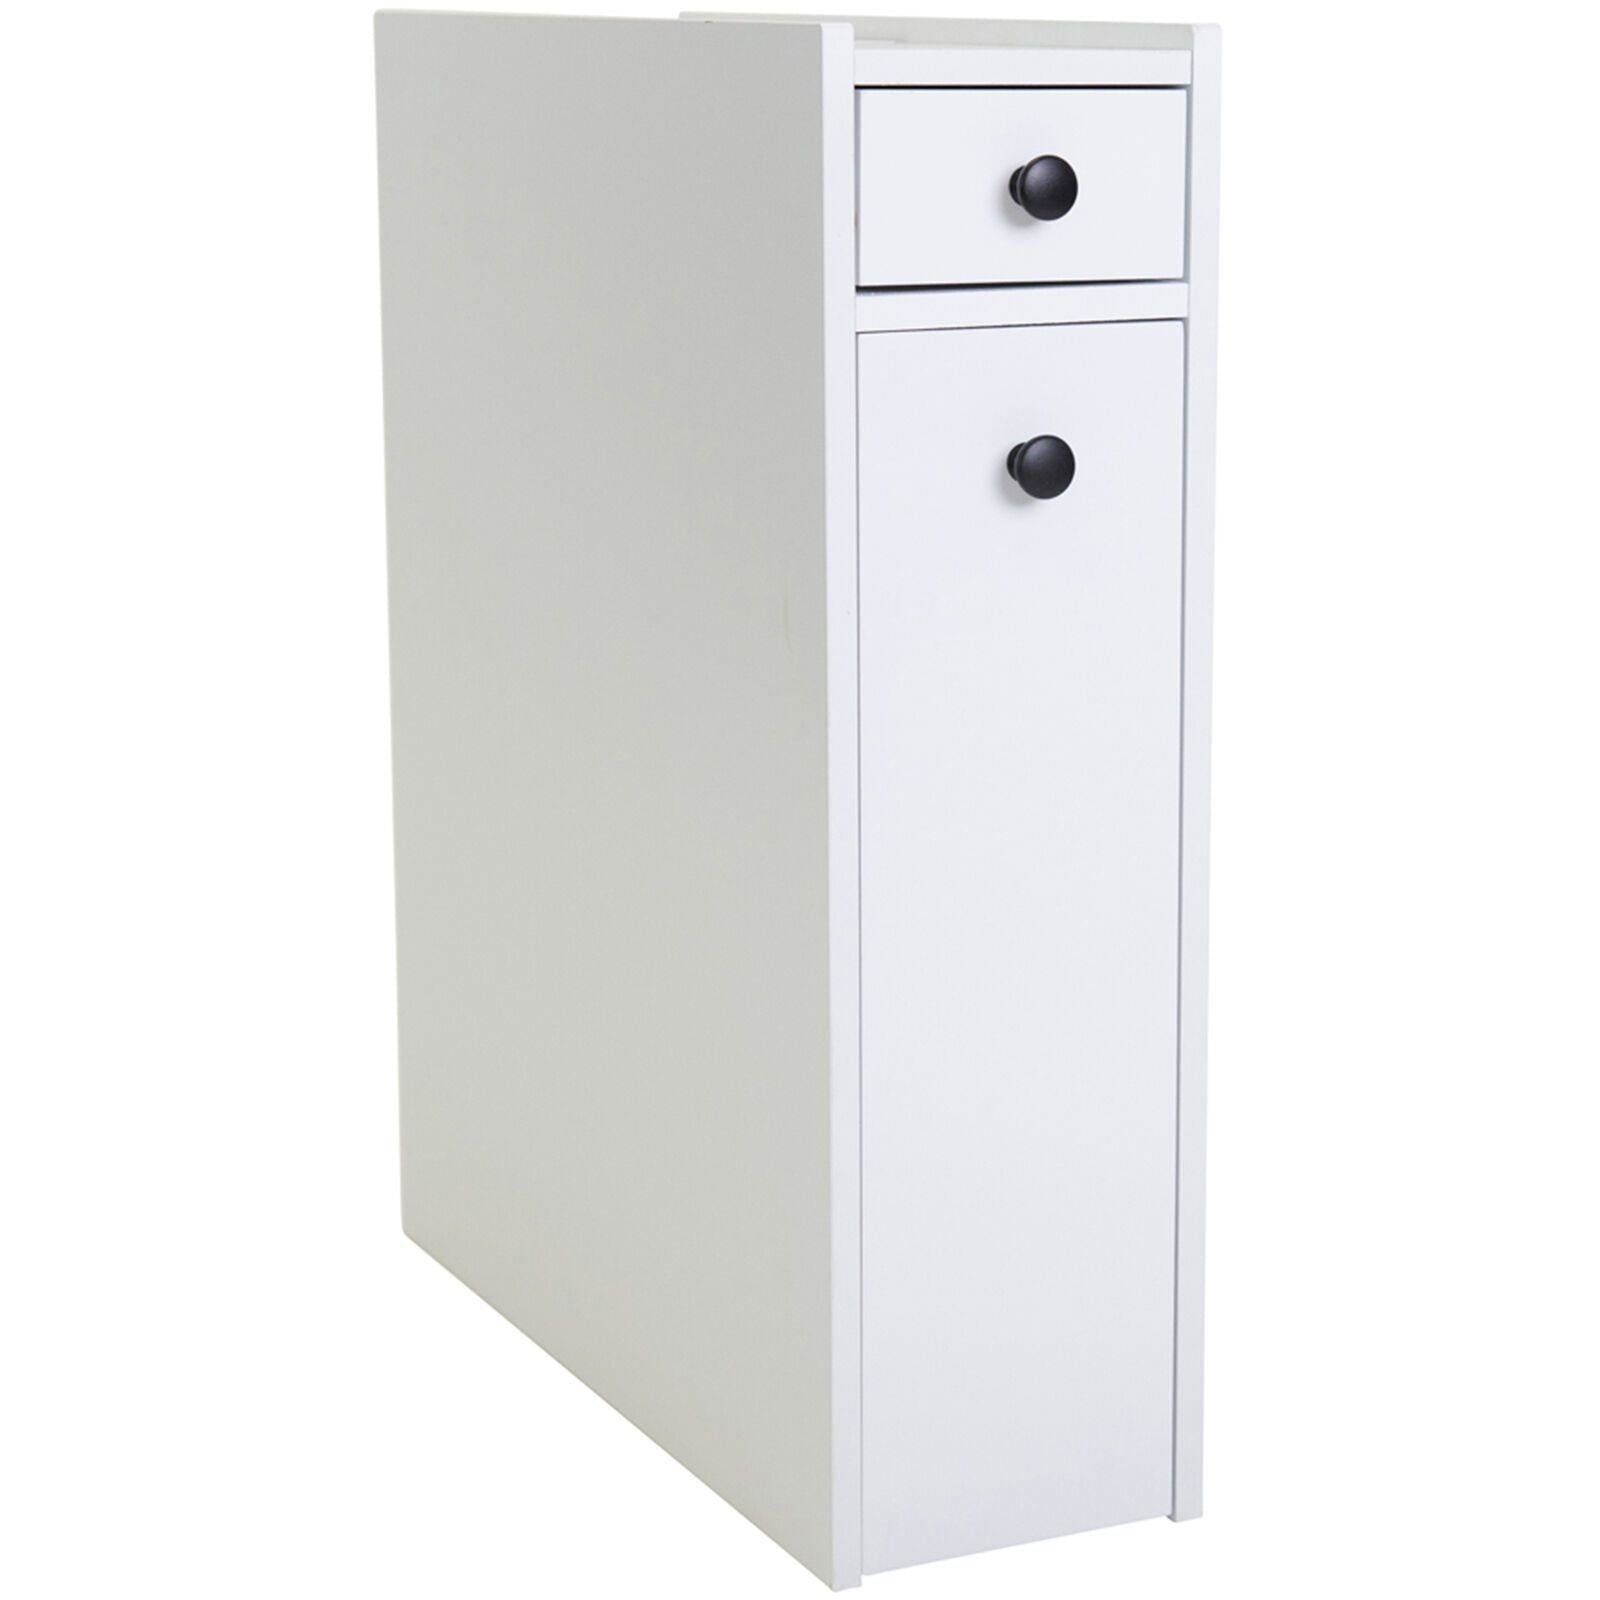 Bathroom Utility Storage Cabinet Caddy White